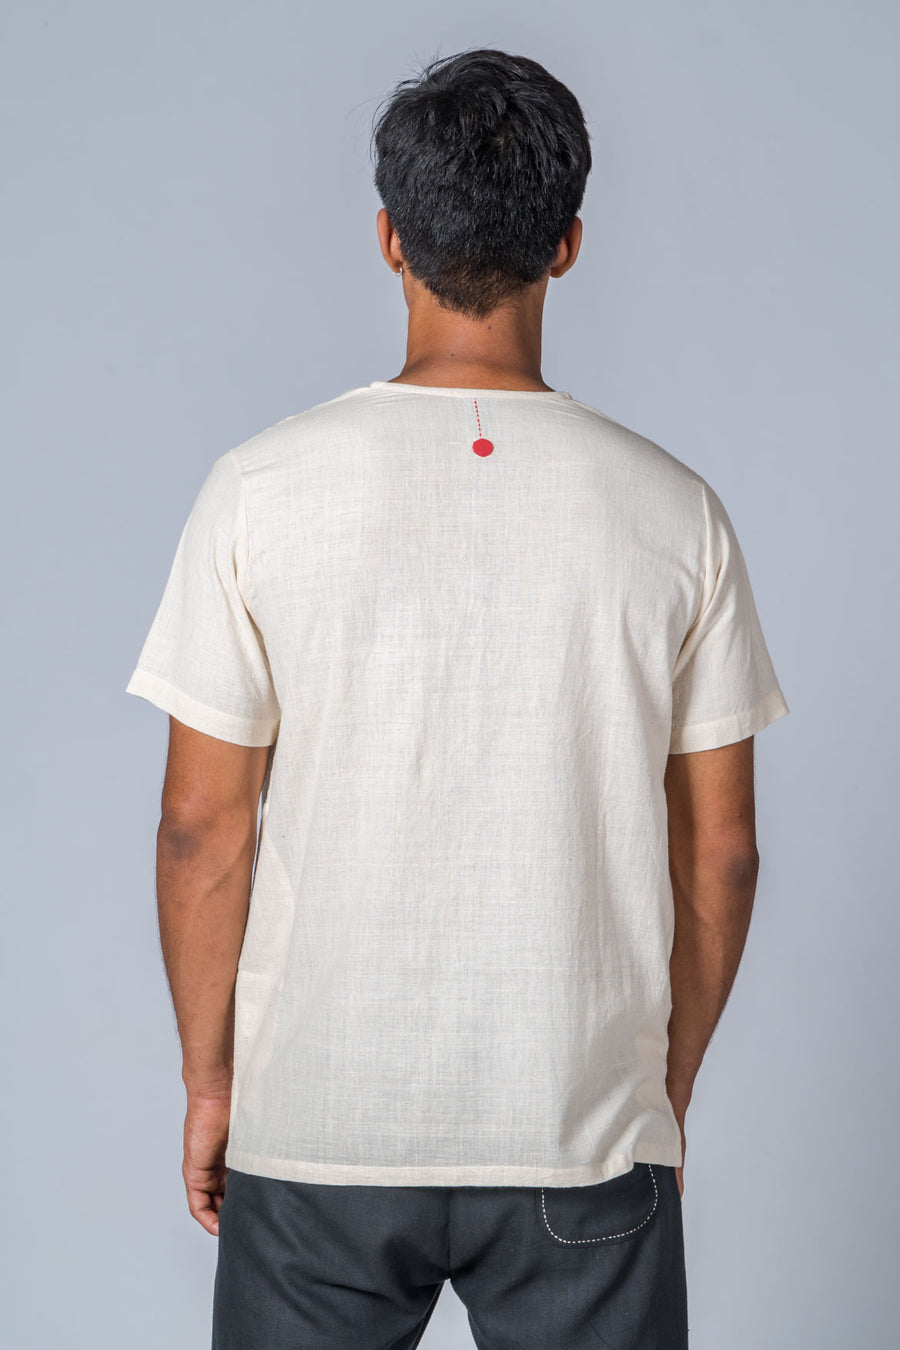 Off-white Handwoven Shirt - TYLER - Upasana Design Studio